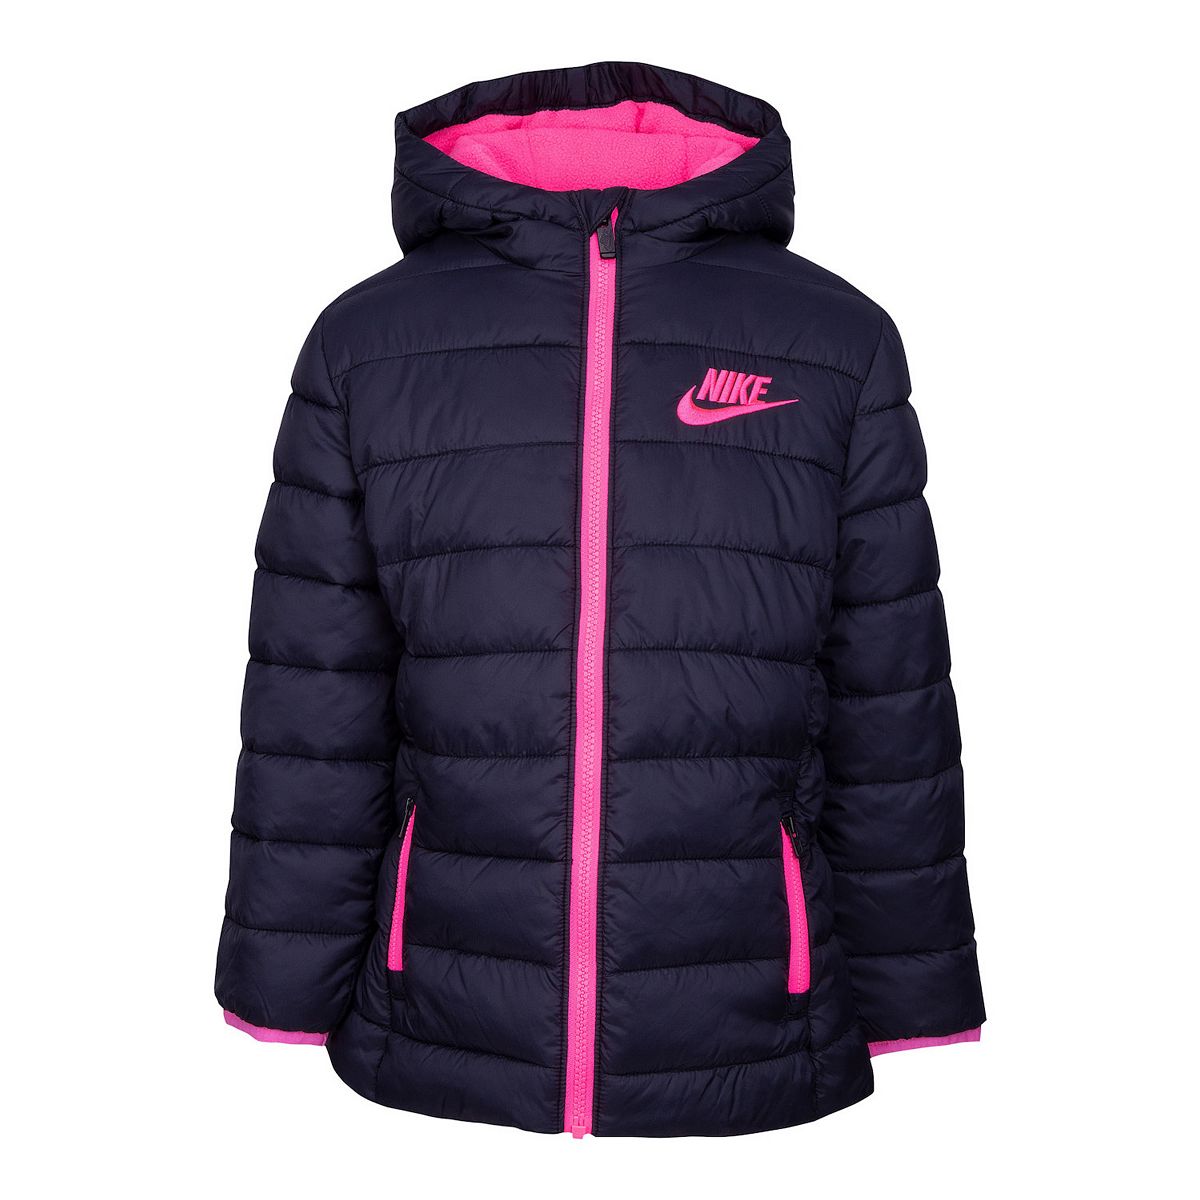 Nike Girls' Stadium Parka Puffer Jacket (Black or Wolf Grey) $28.50 & More + Free Shipping on $49+